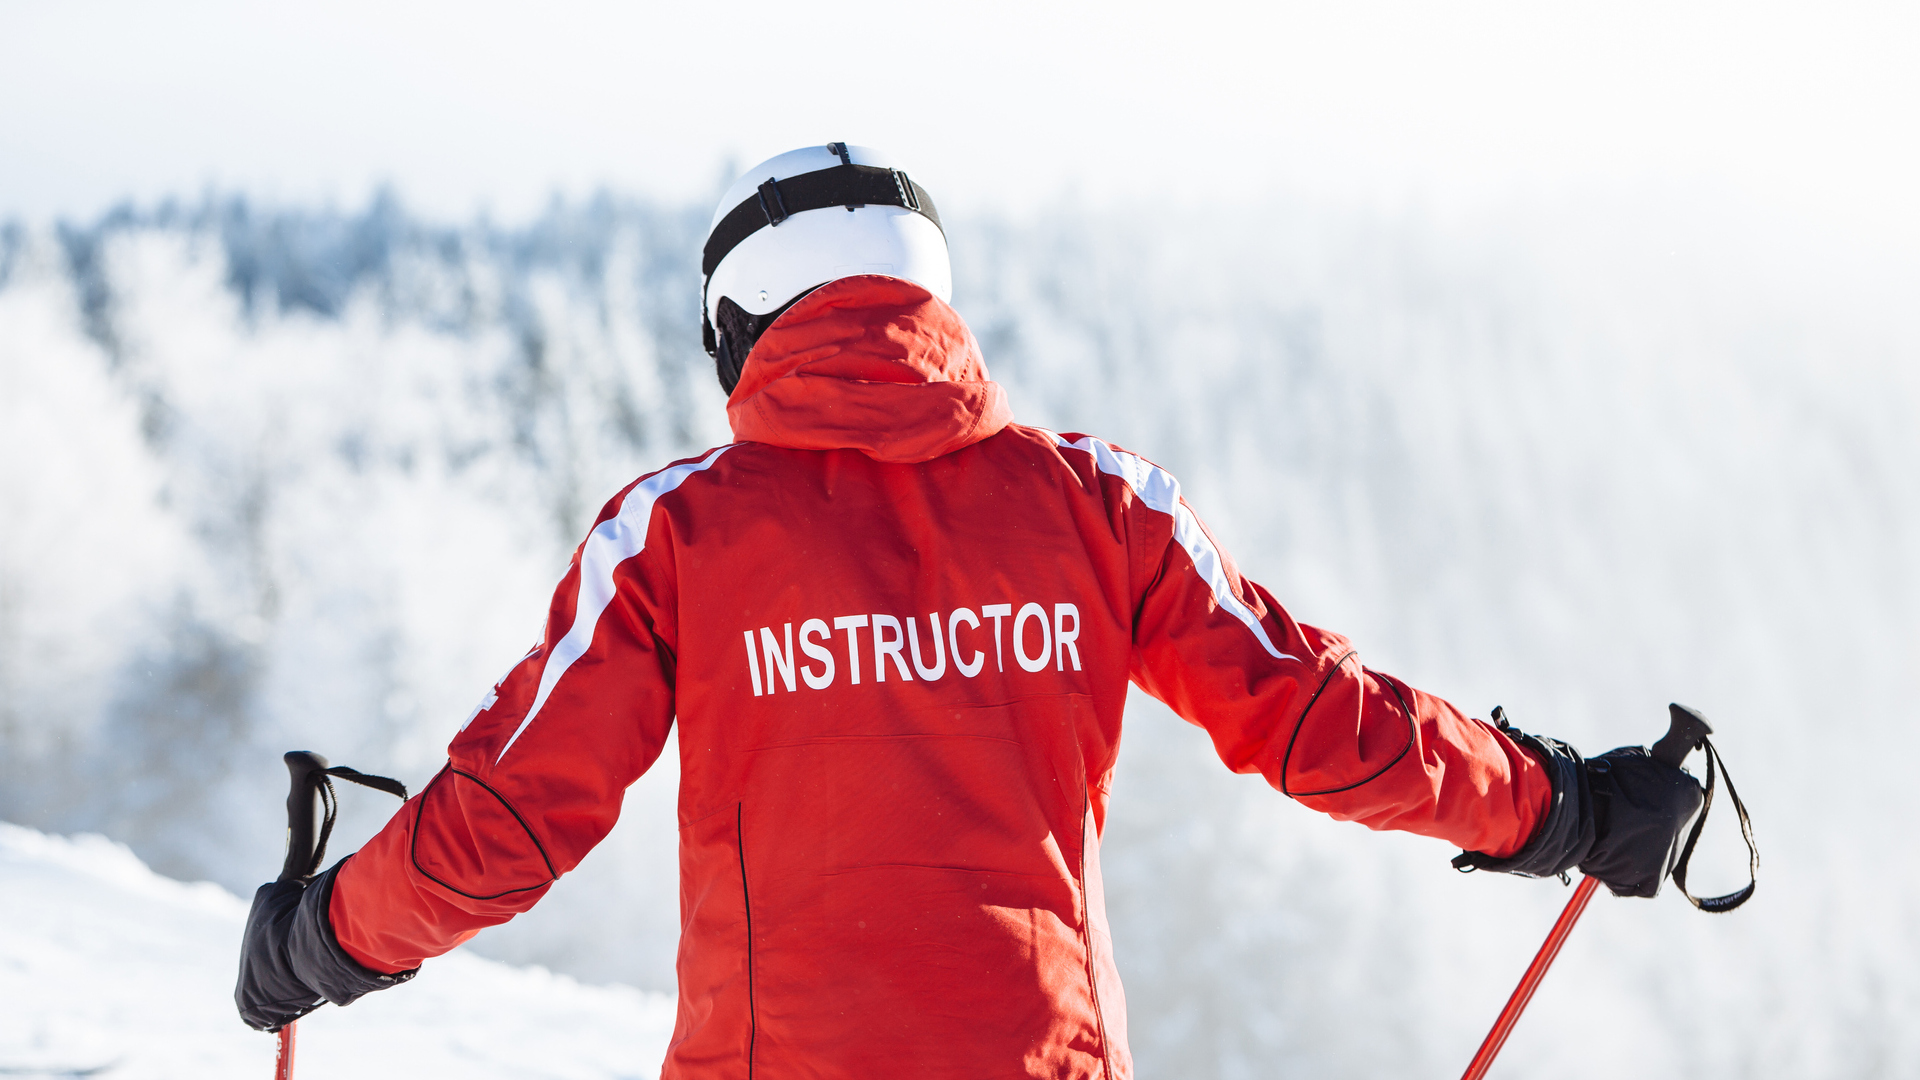 Ski instructor trains people